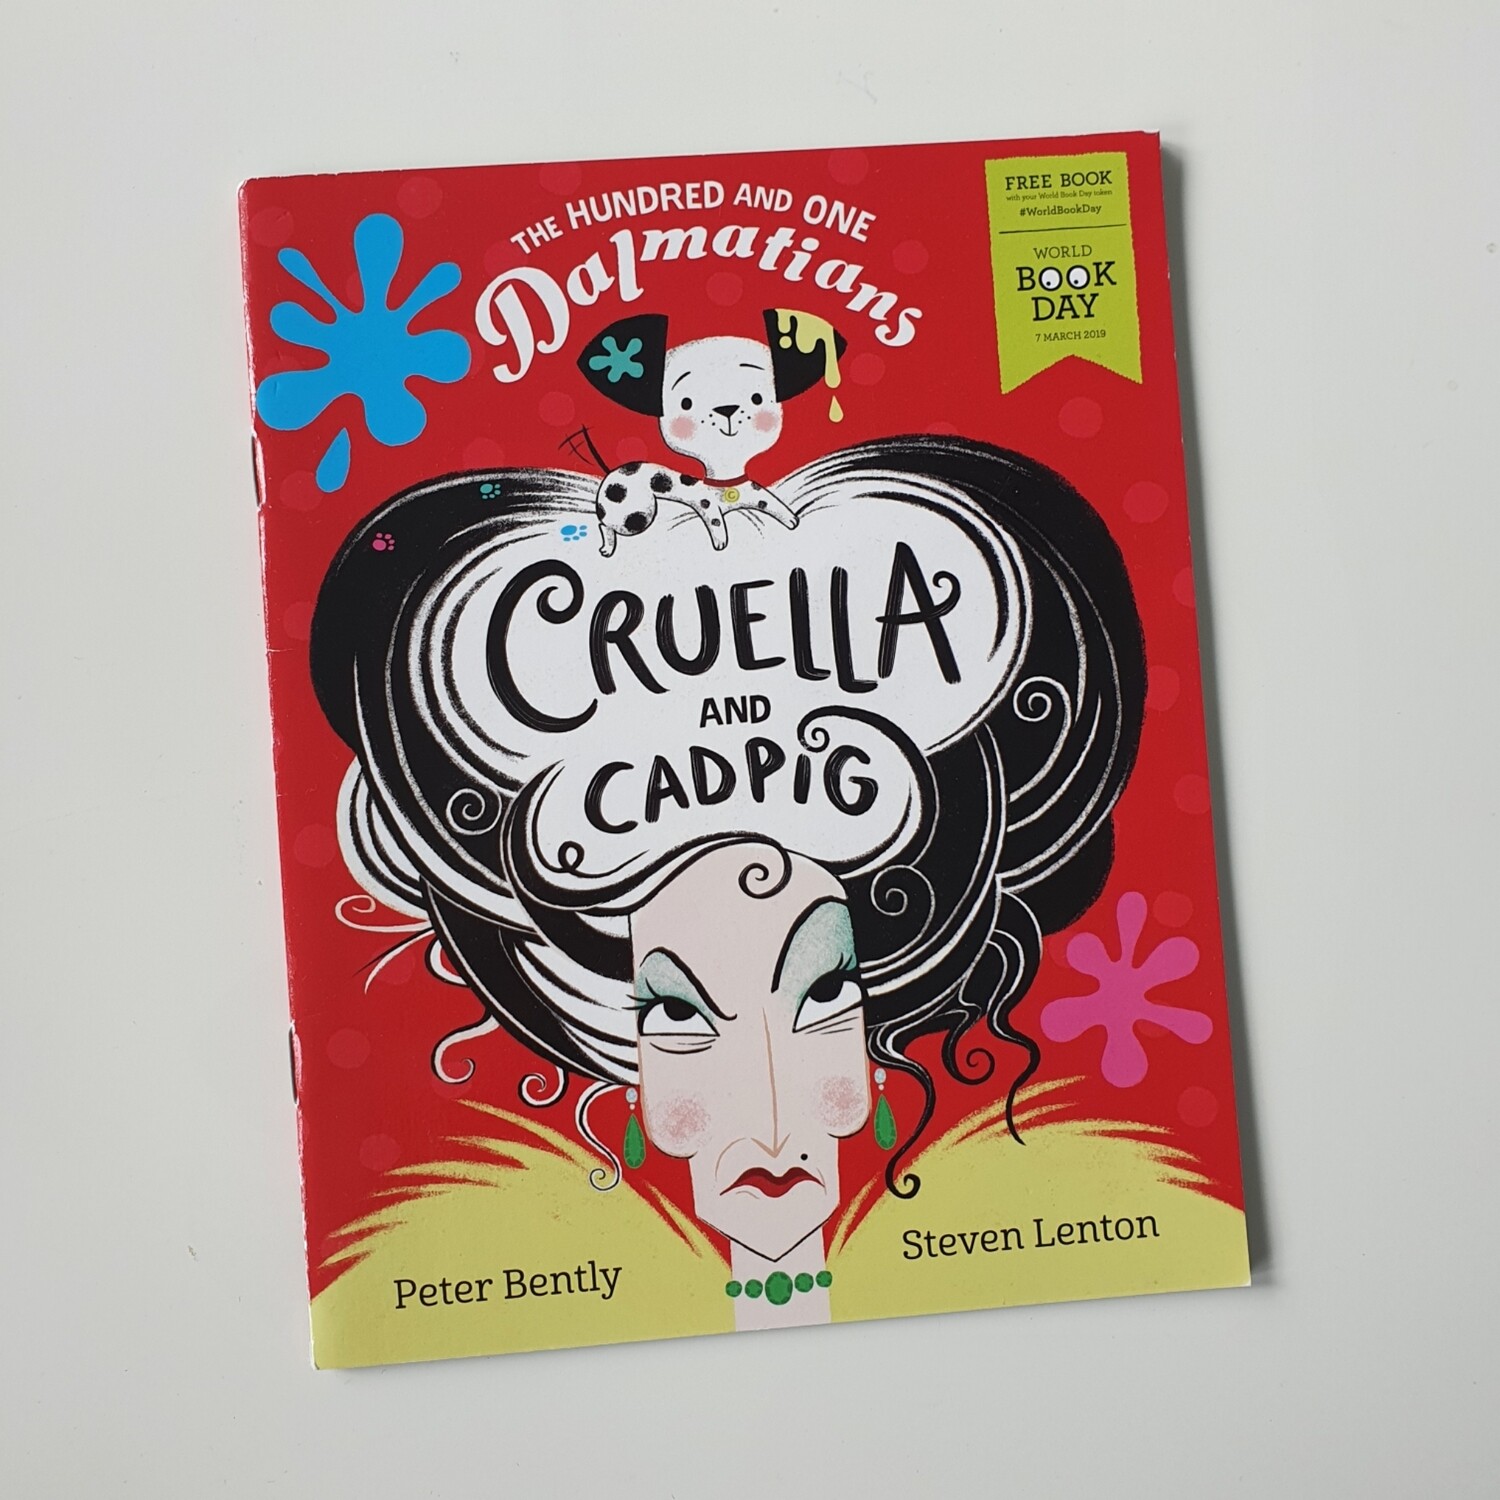 Cruella and Cadpig (101 Dalmatians) Notebook - made from a paperback book